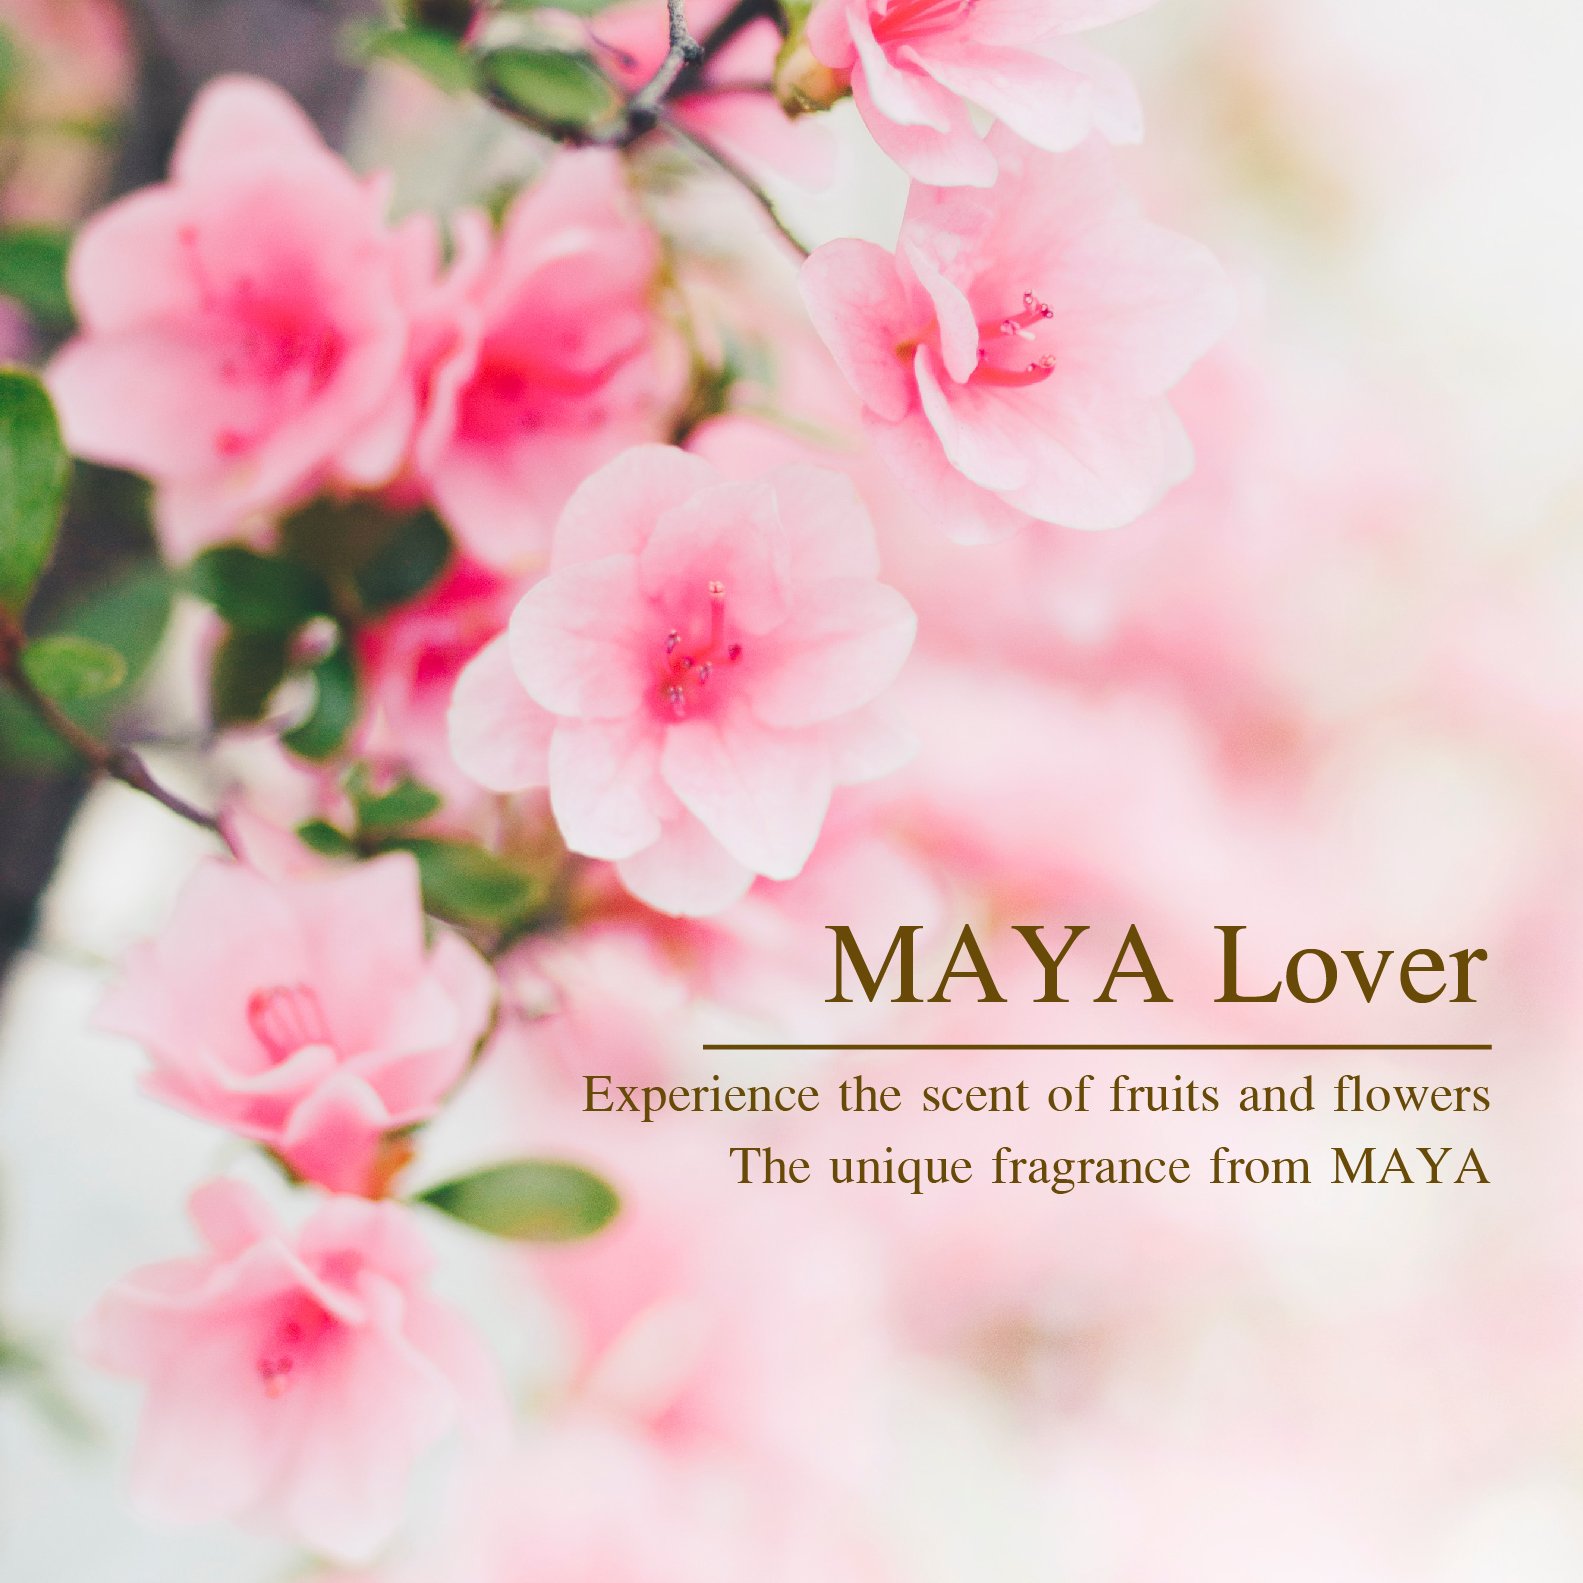 Reed Diffuser “MAYA Lover” สัมผัสความหอมจากผลไม้และดอกไม้ เอกลักษณ์กลิ่นหอมจาก MAYA